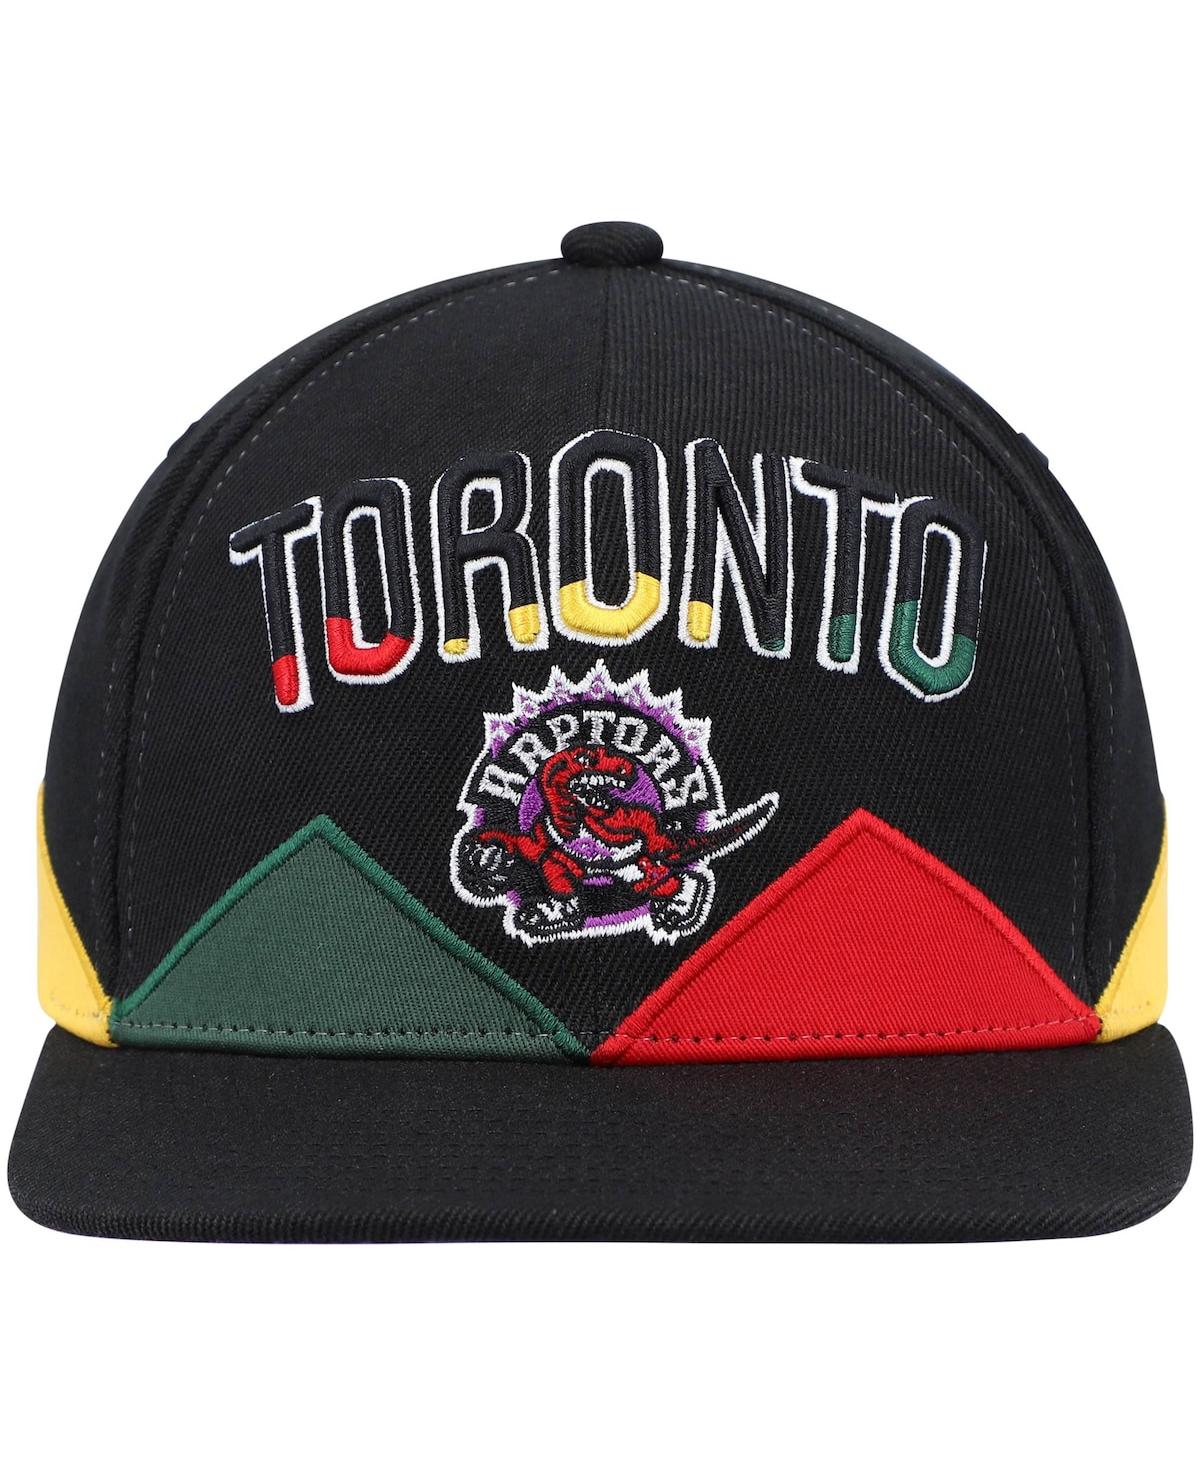 Shop Mitchell & Ness Men's  Black Toronto Raptors Hardwood Classics Black History Month Snapback Hat